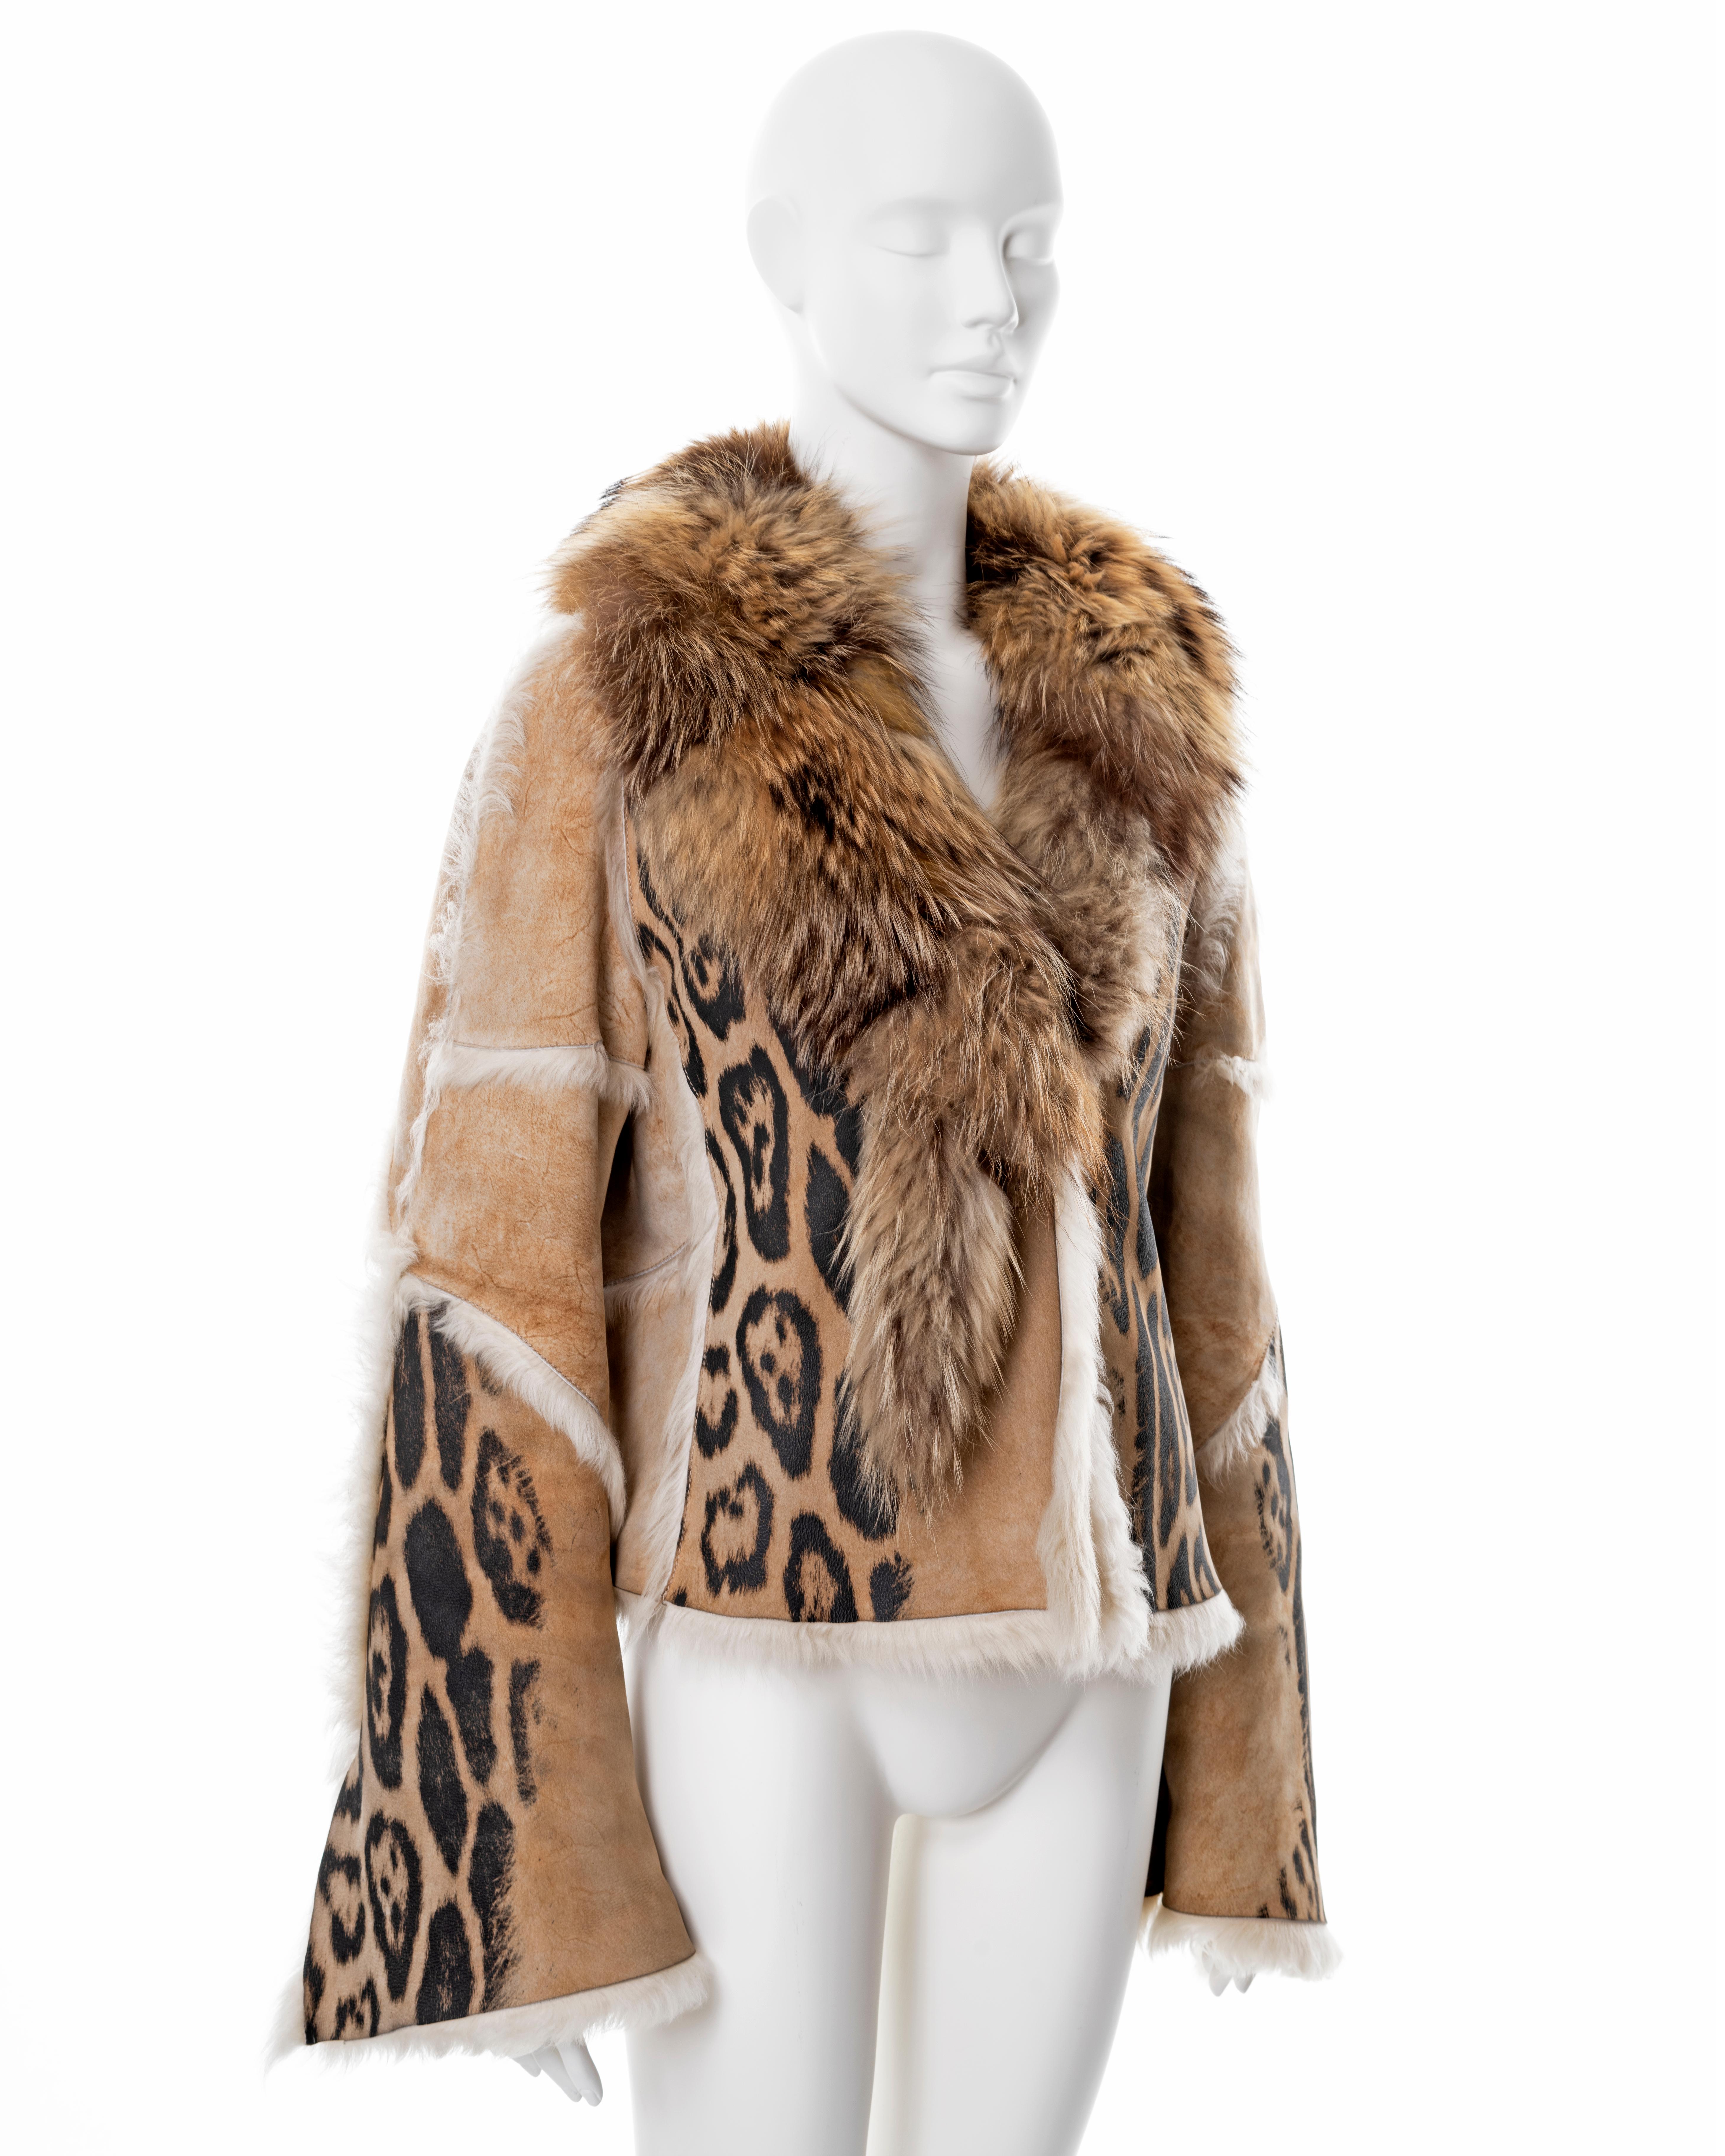 Roberto Cavalli leopard print sheepskin jacket with fox fur collar, fw 2001 1